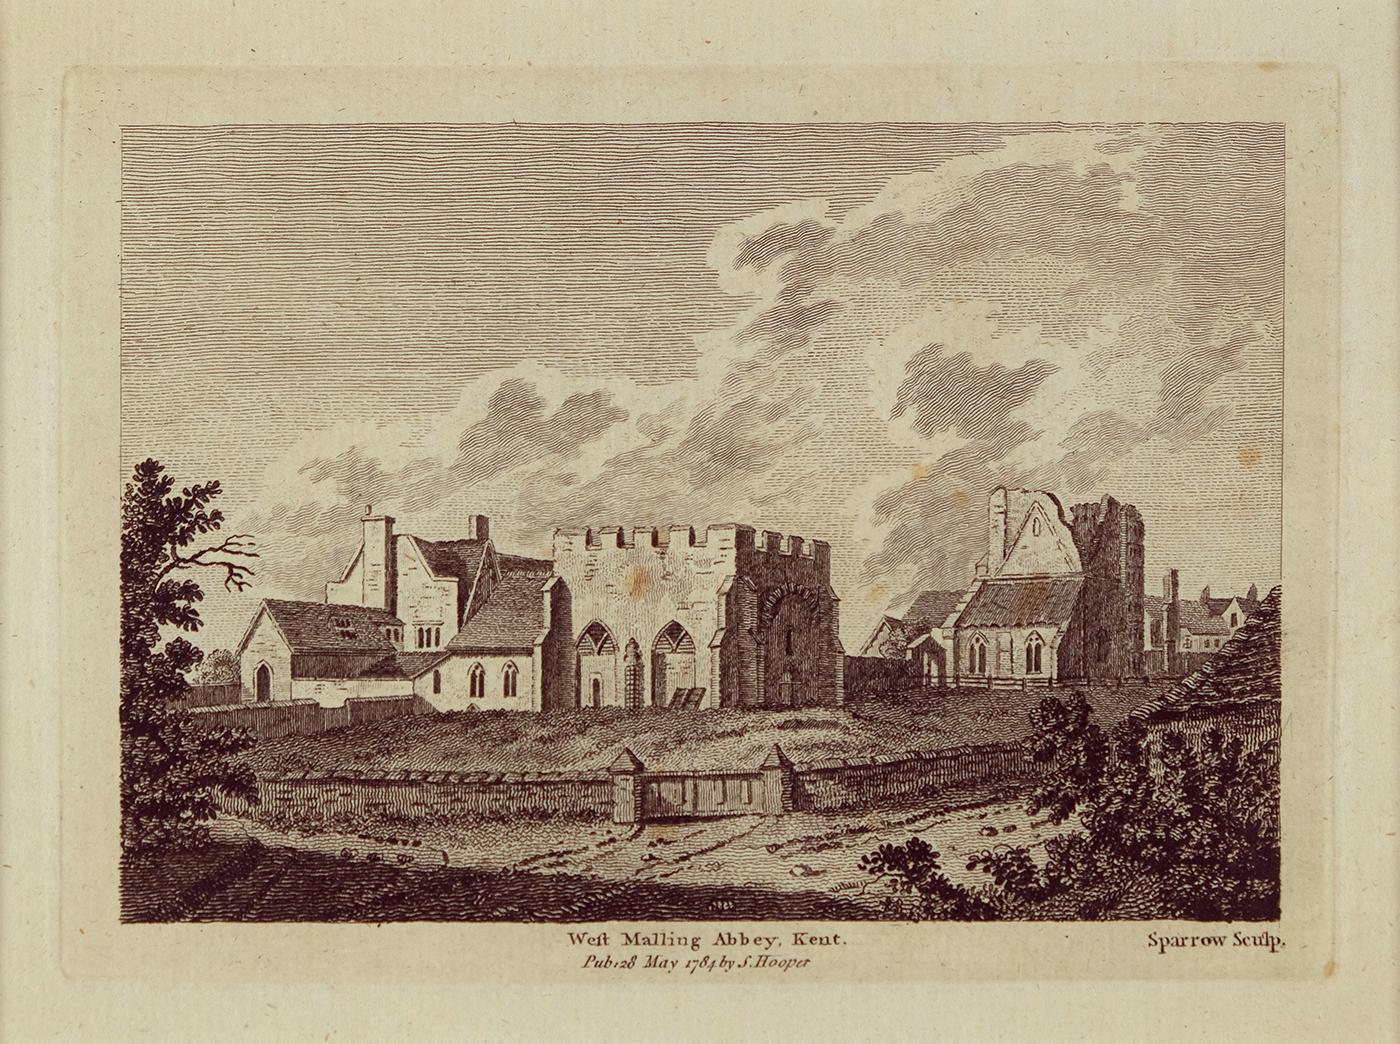 Landscape Print Samuel Hooper - Trame Malling Abbey, Kent. Impression ancienne